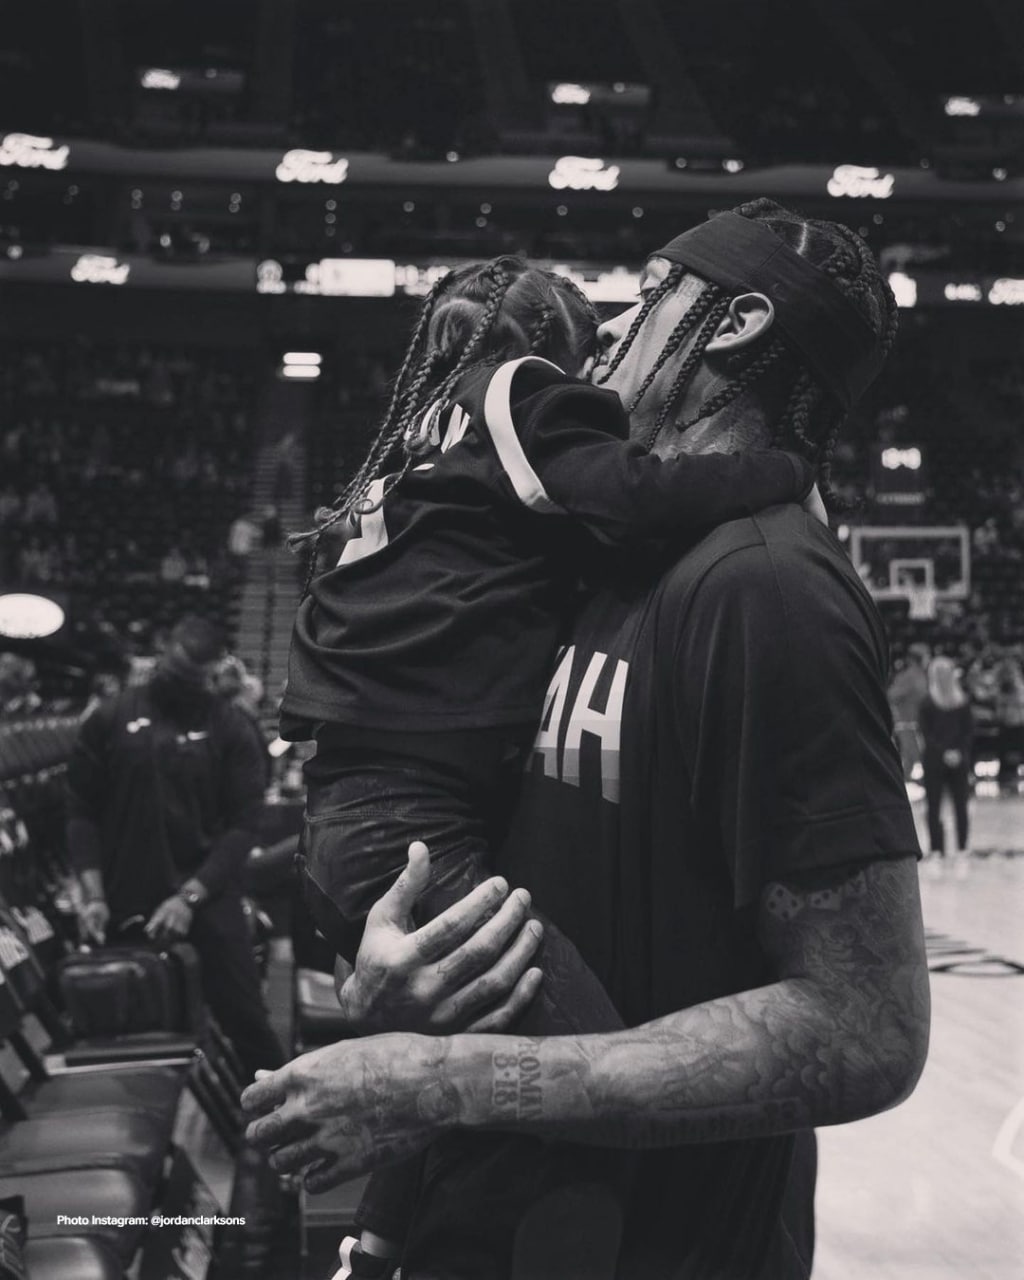 Jordan Clarkson carrying his daughter Cali before an NBA game